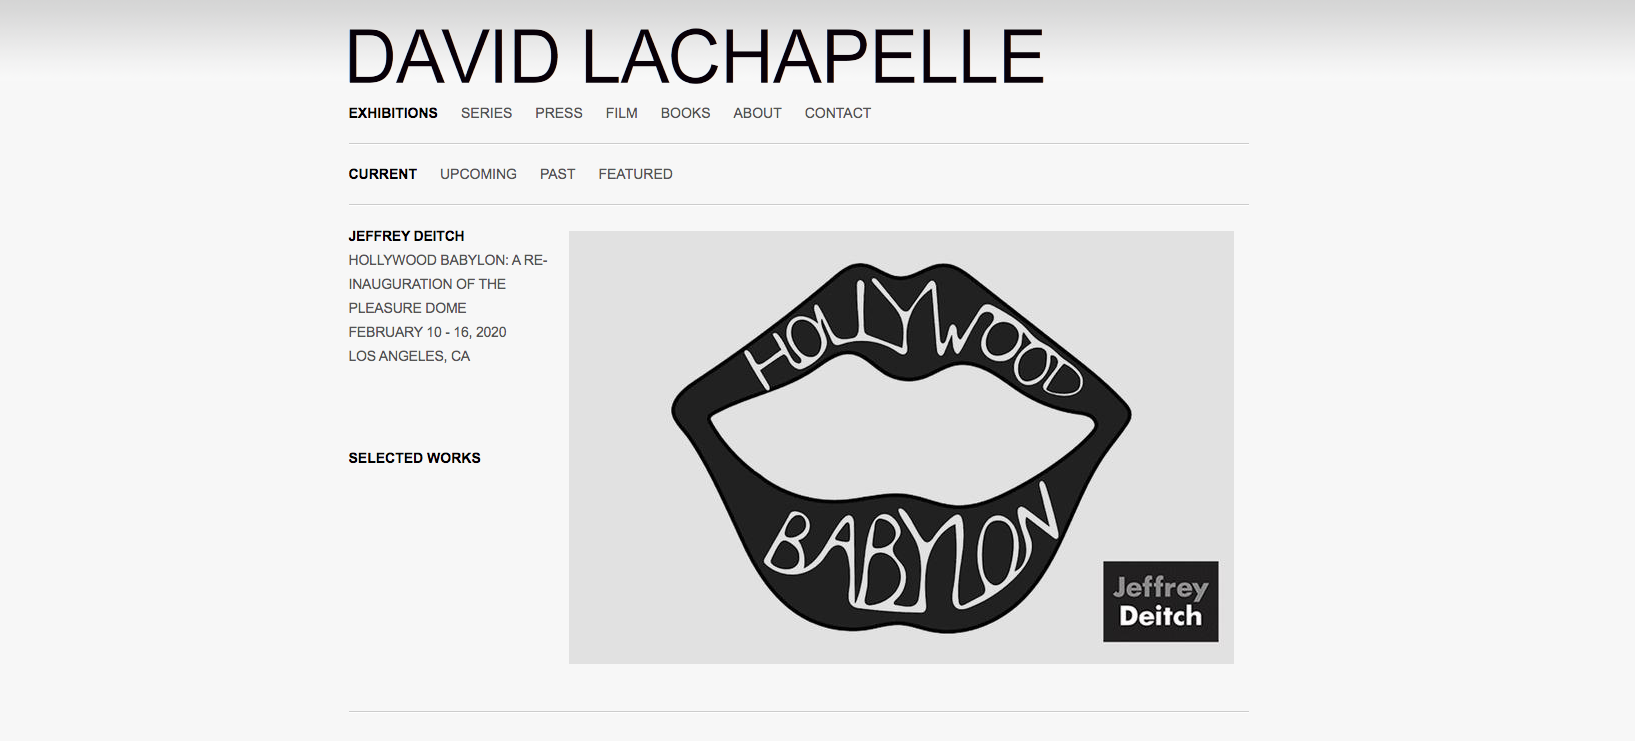 David LaChapelle | HOLLYWOOD BABYLON, JEFFREY DEITCH, LOS ANGELES, UNITED STATES, FEB 10-15, 2020 | 1